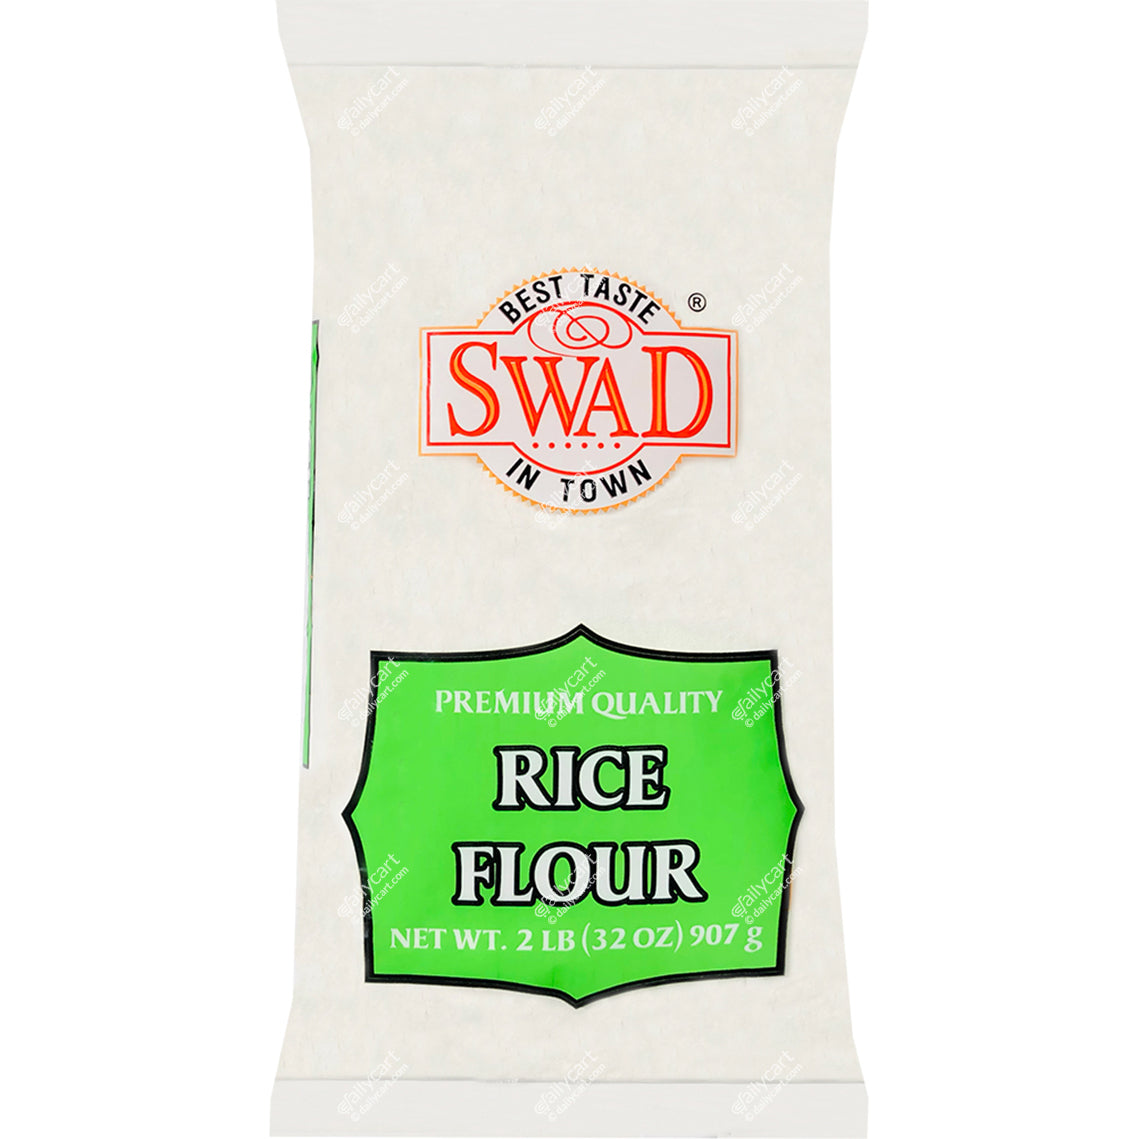 Swad Rice Flour, 4 lb